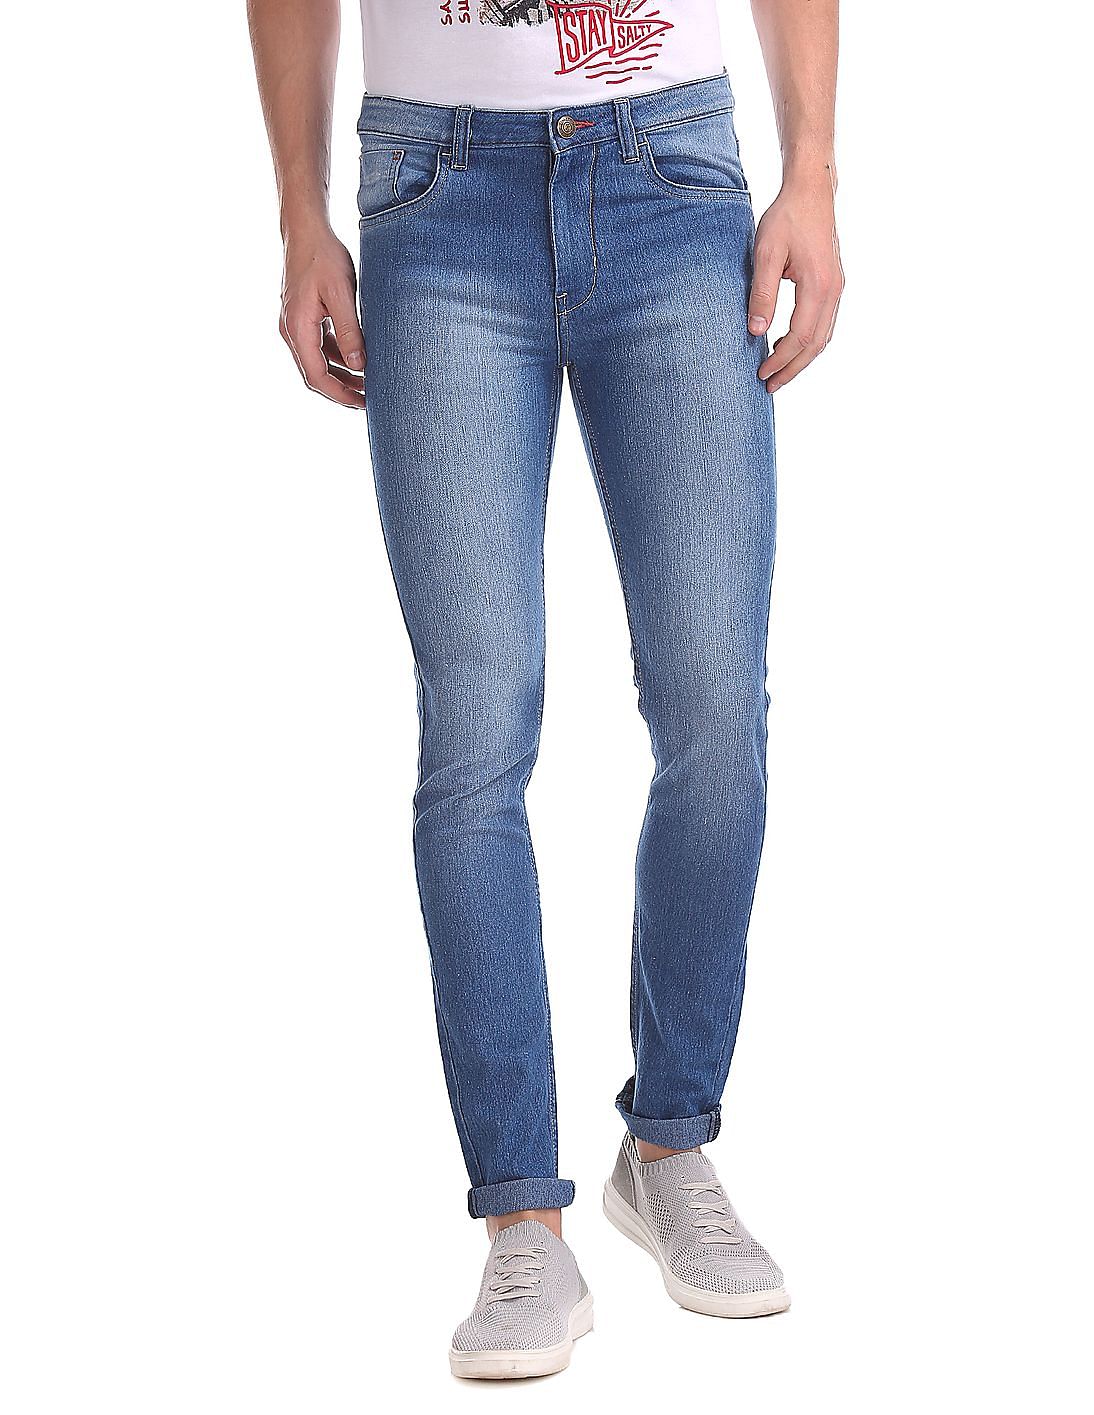 newport jeans official website